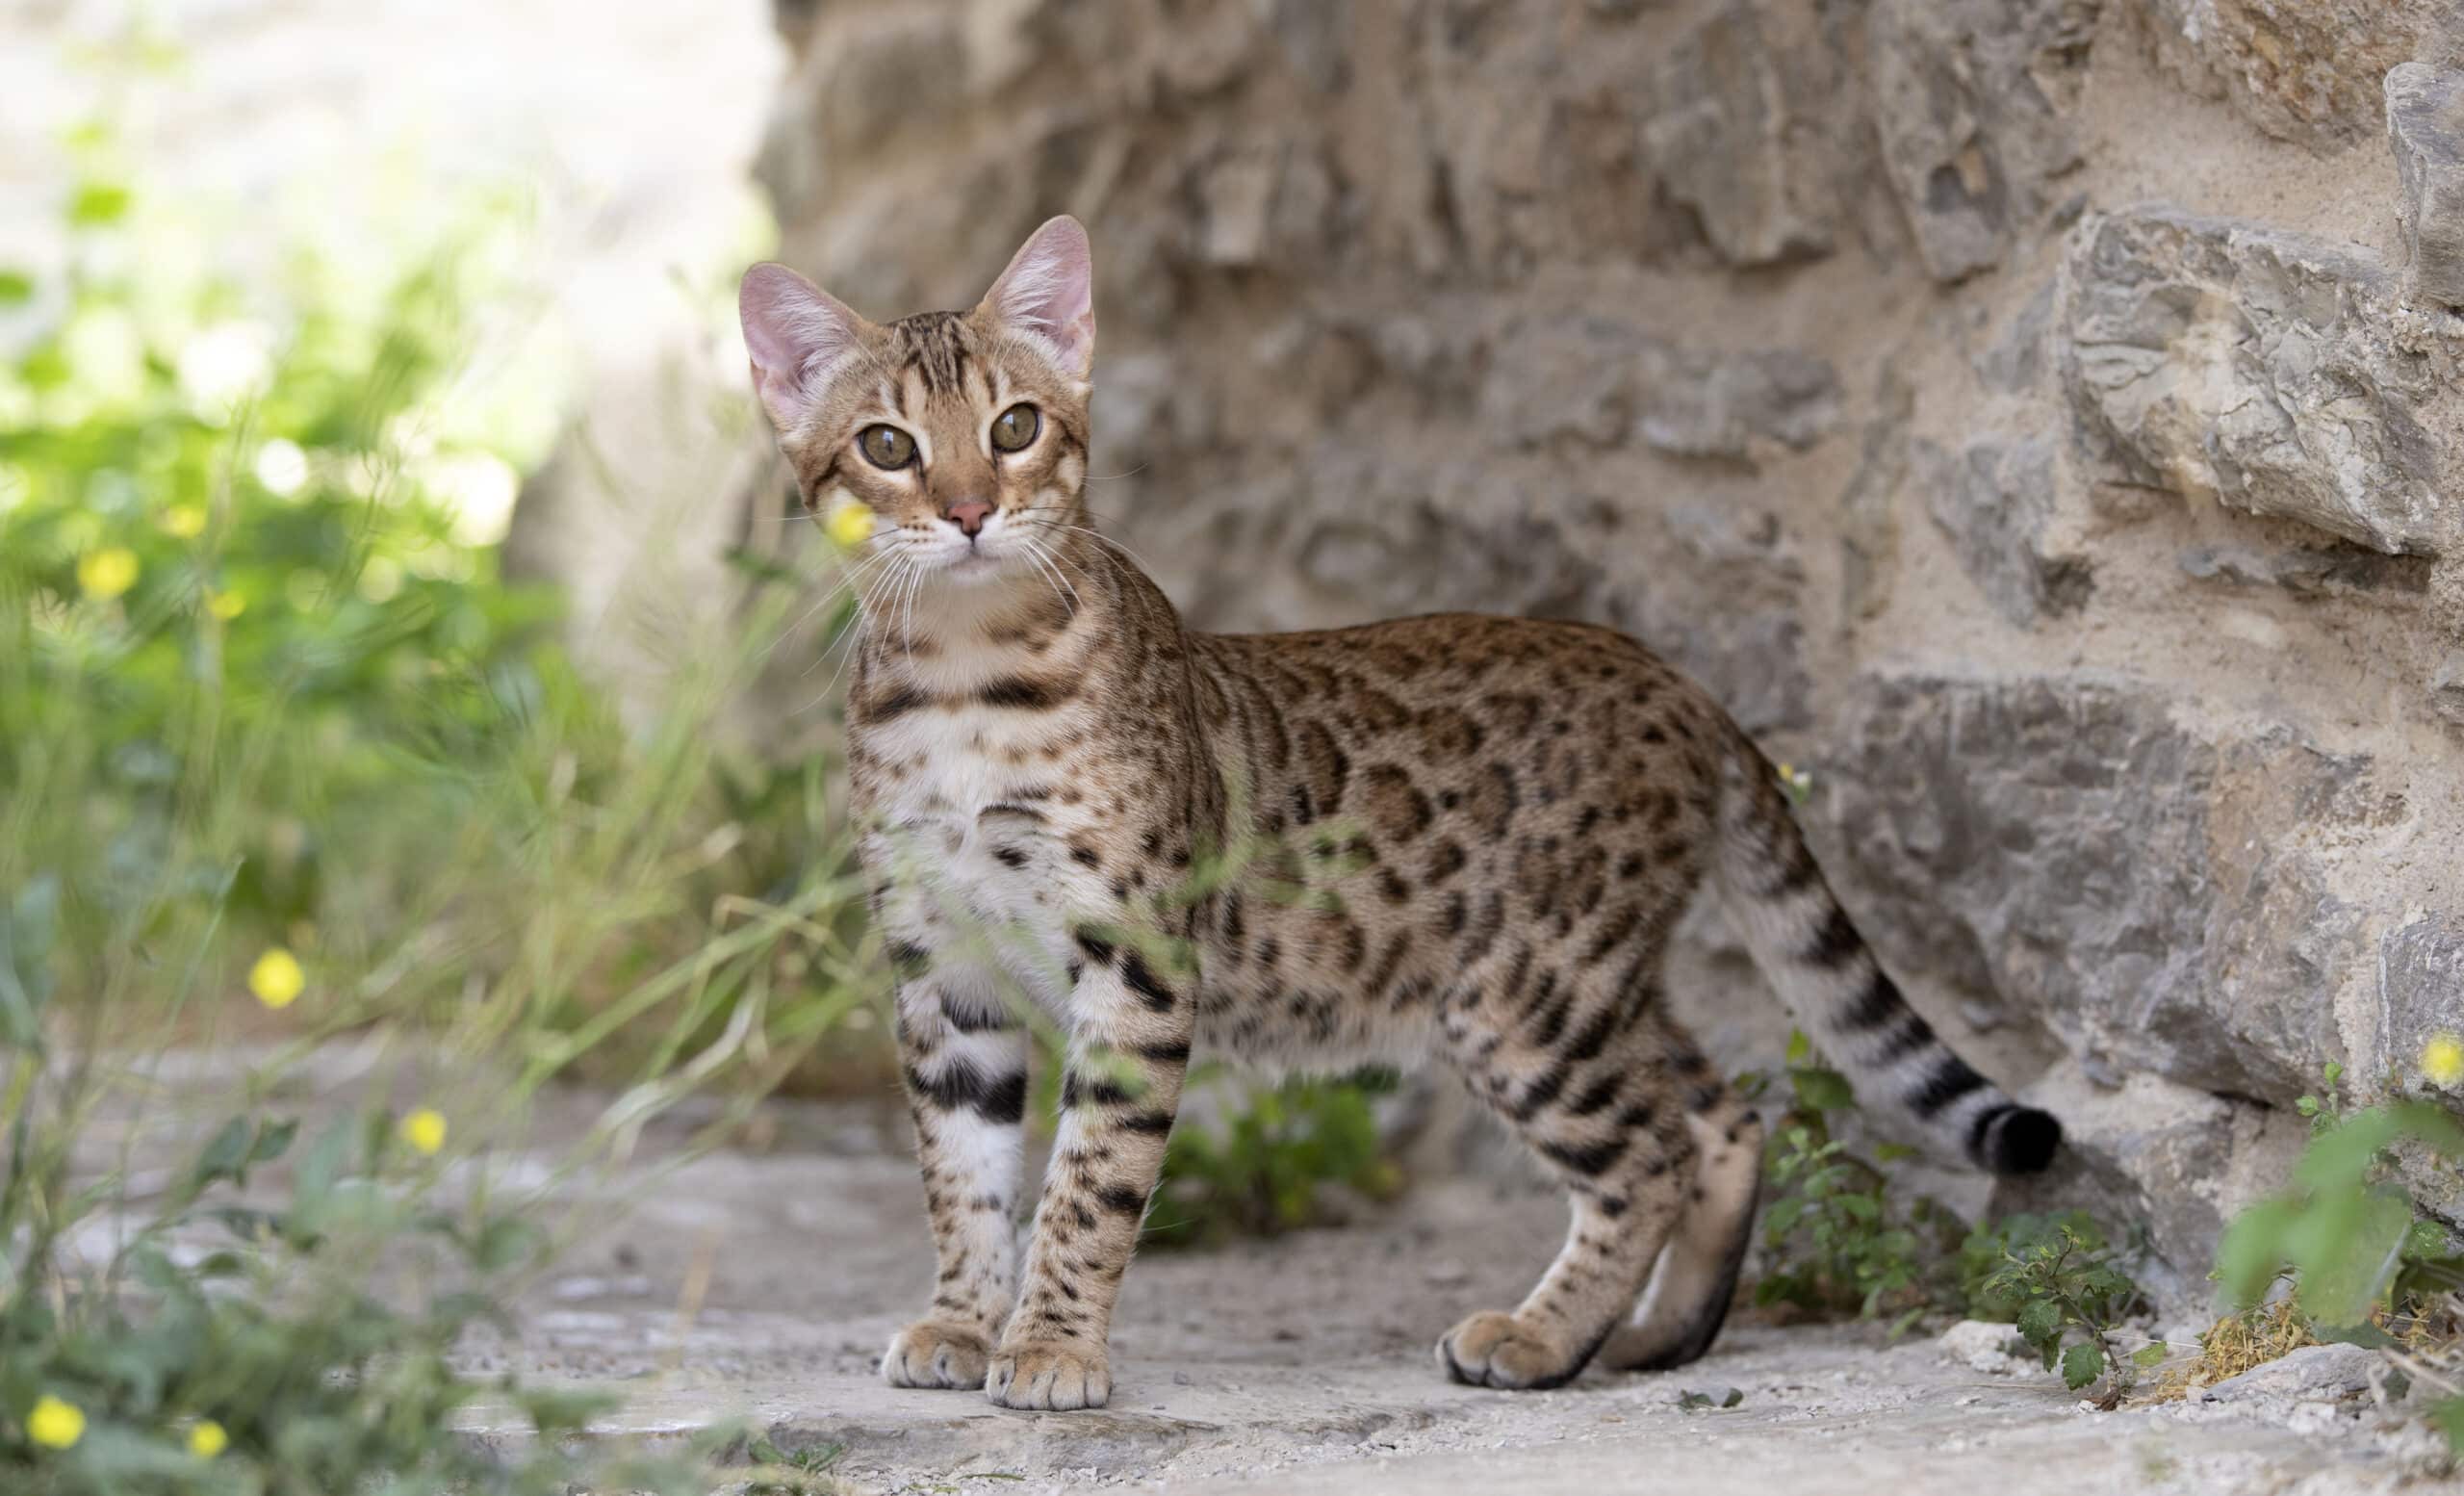 World's Top 12 Priciest Cat Breeds: Spotlight on Ashera and Savannah